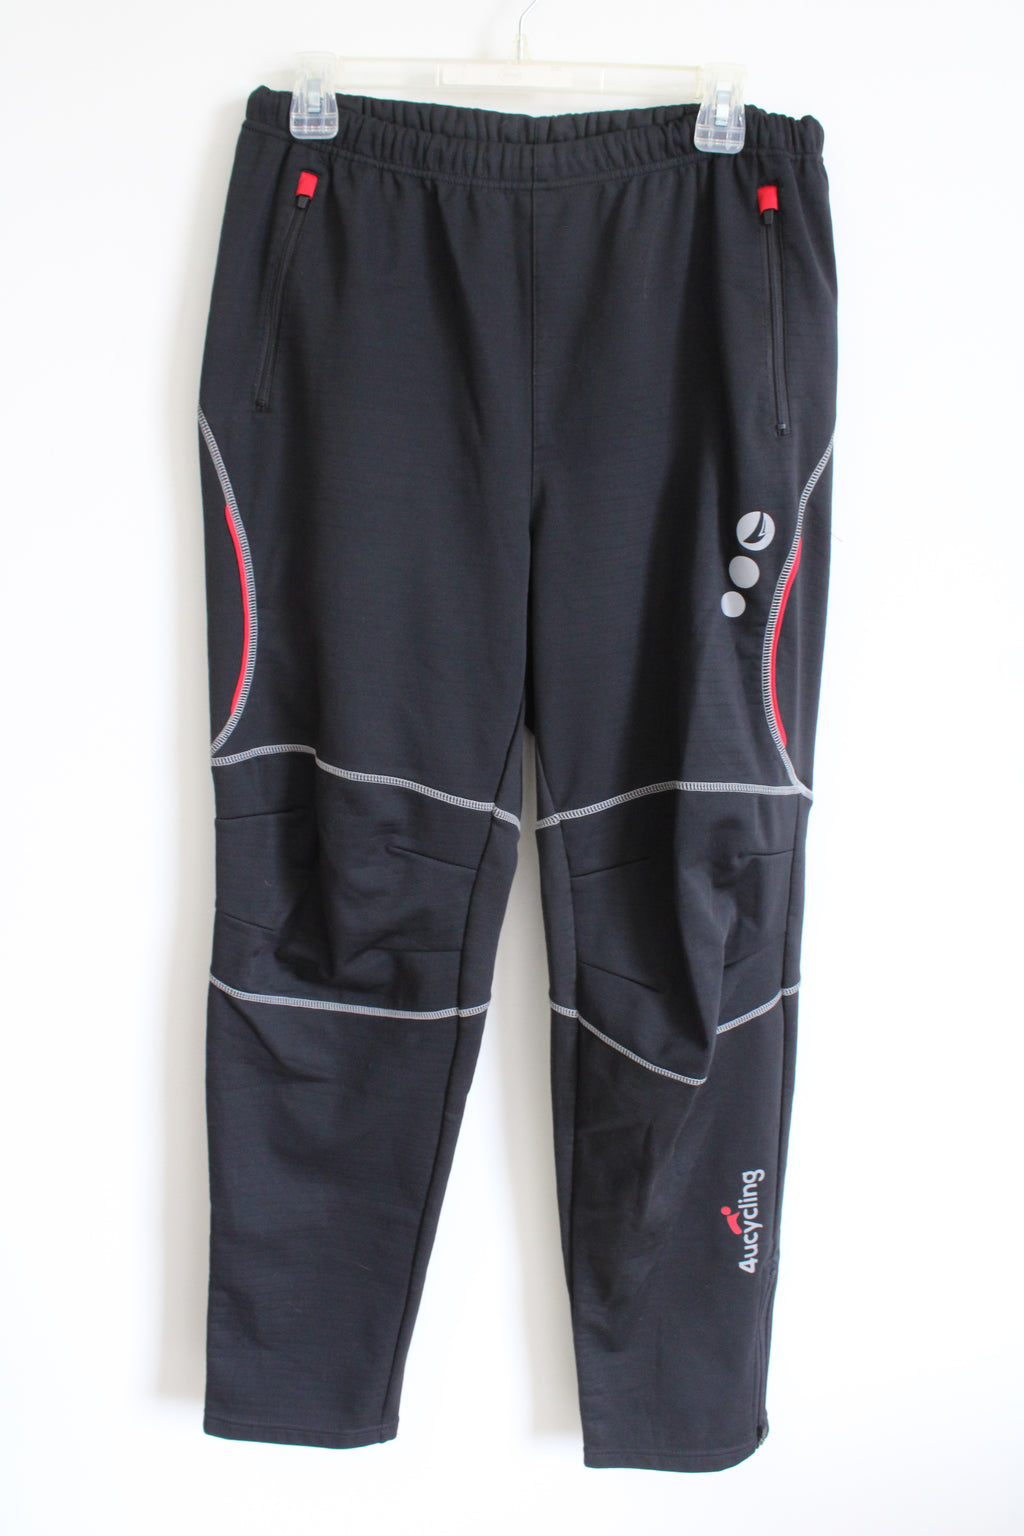 4UCycling Fleece Lined Winter Black Cycling Pants | 2XL